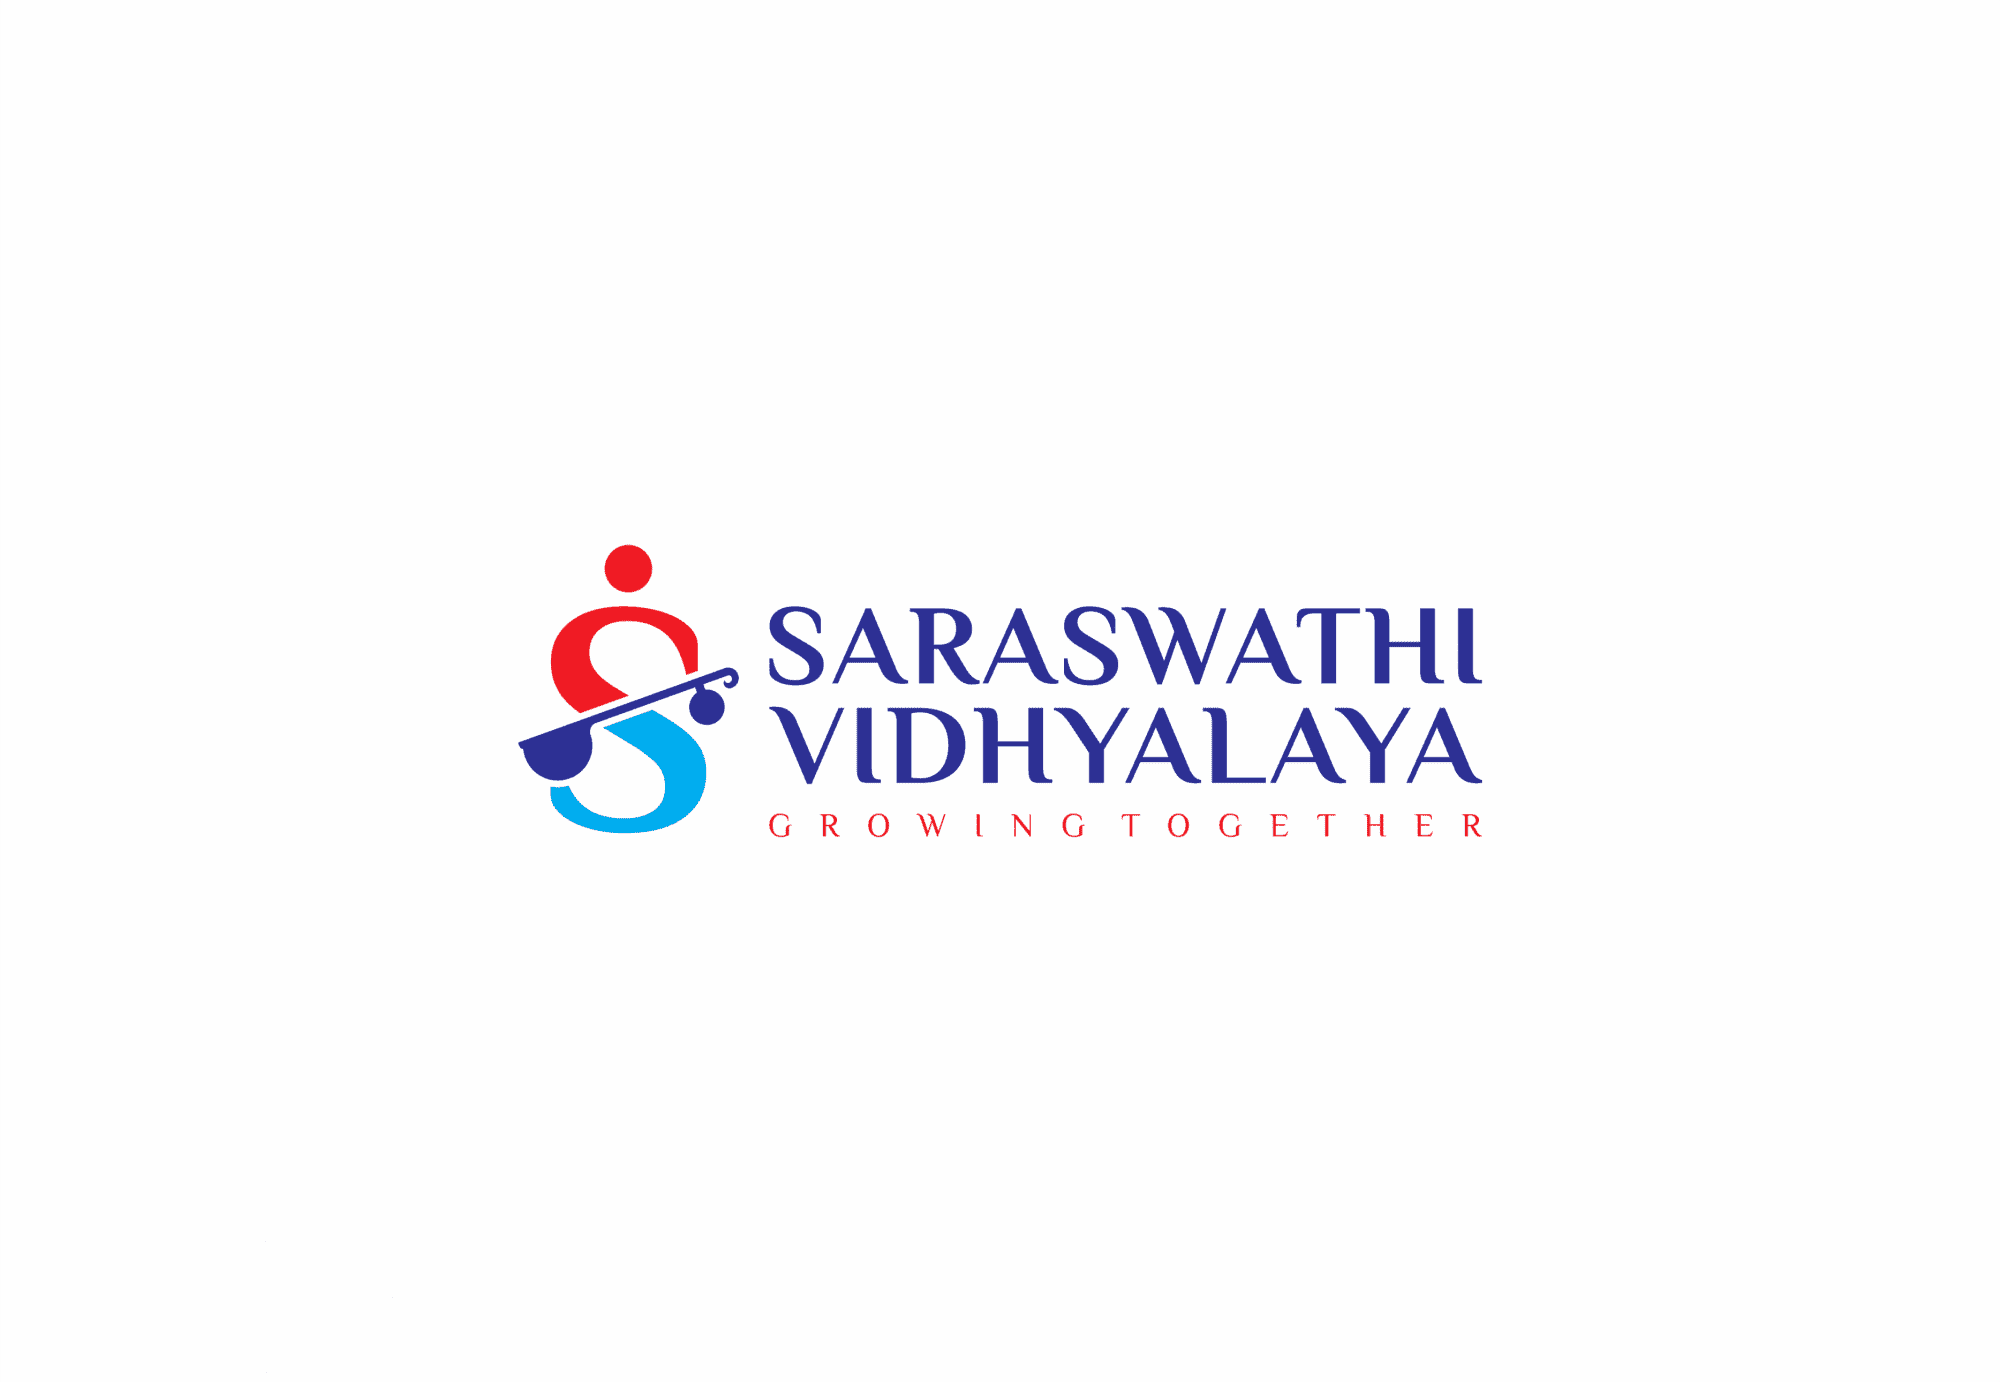 Sarashwathi Vidhyalaya Logo Branding & Packaging Design in Dindugul by Creative Prints thecreativeprints